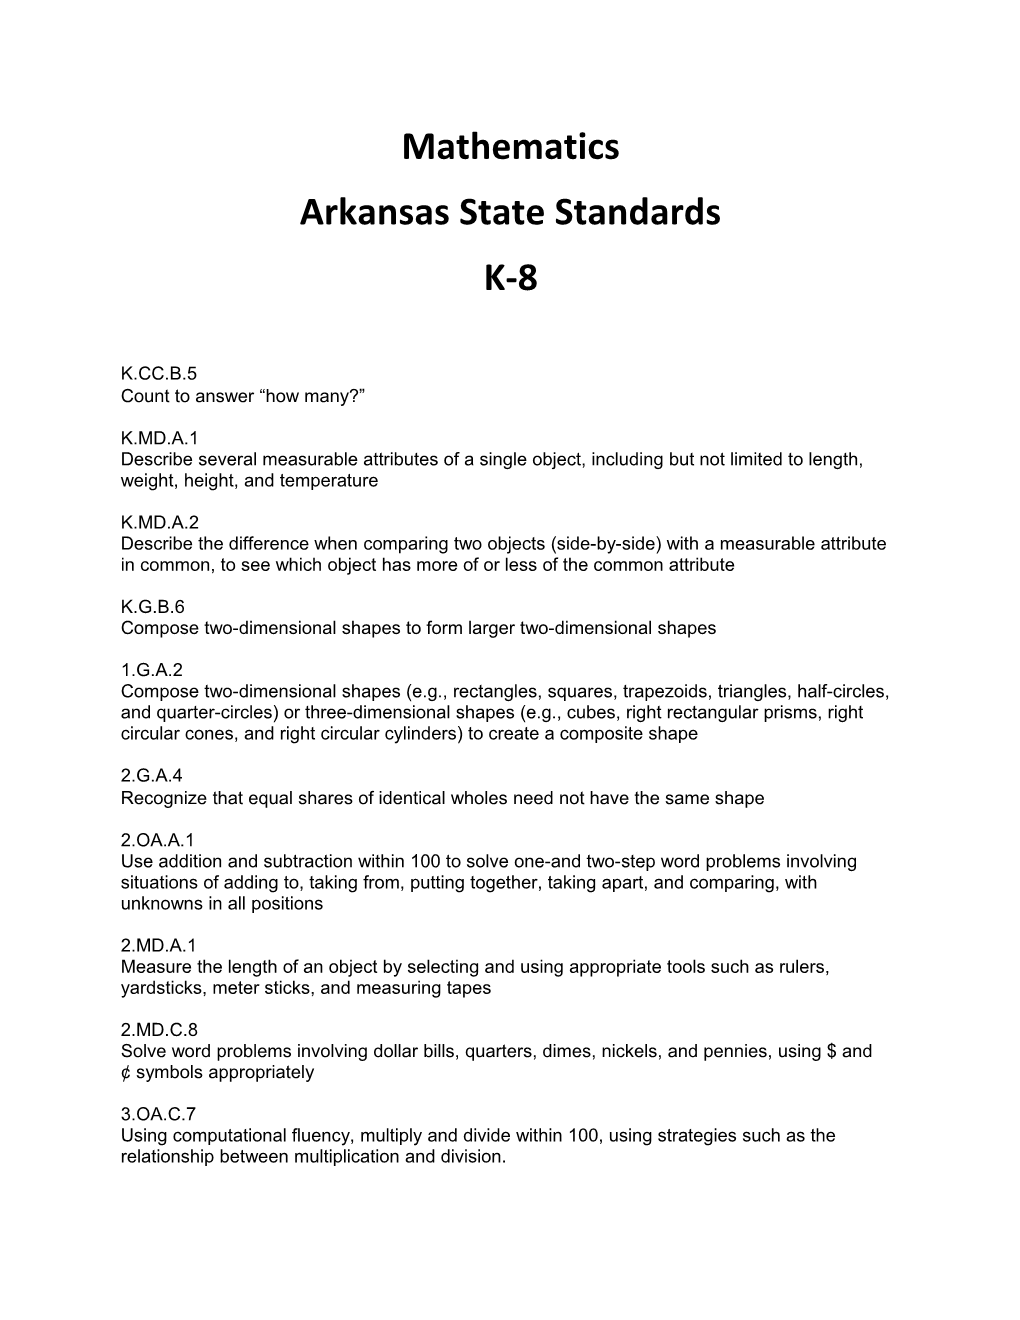 Arkansas State Standards